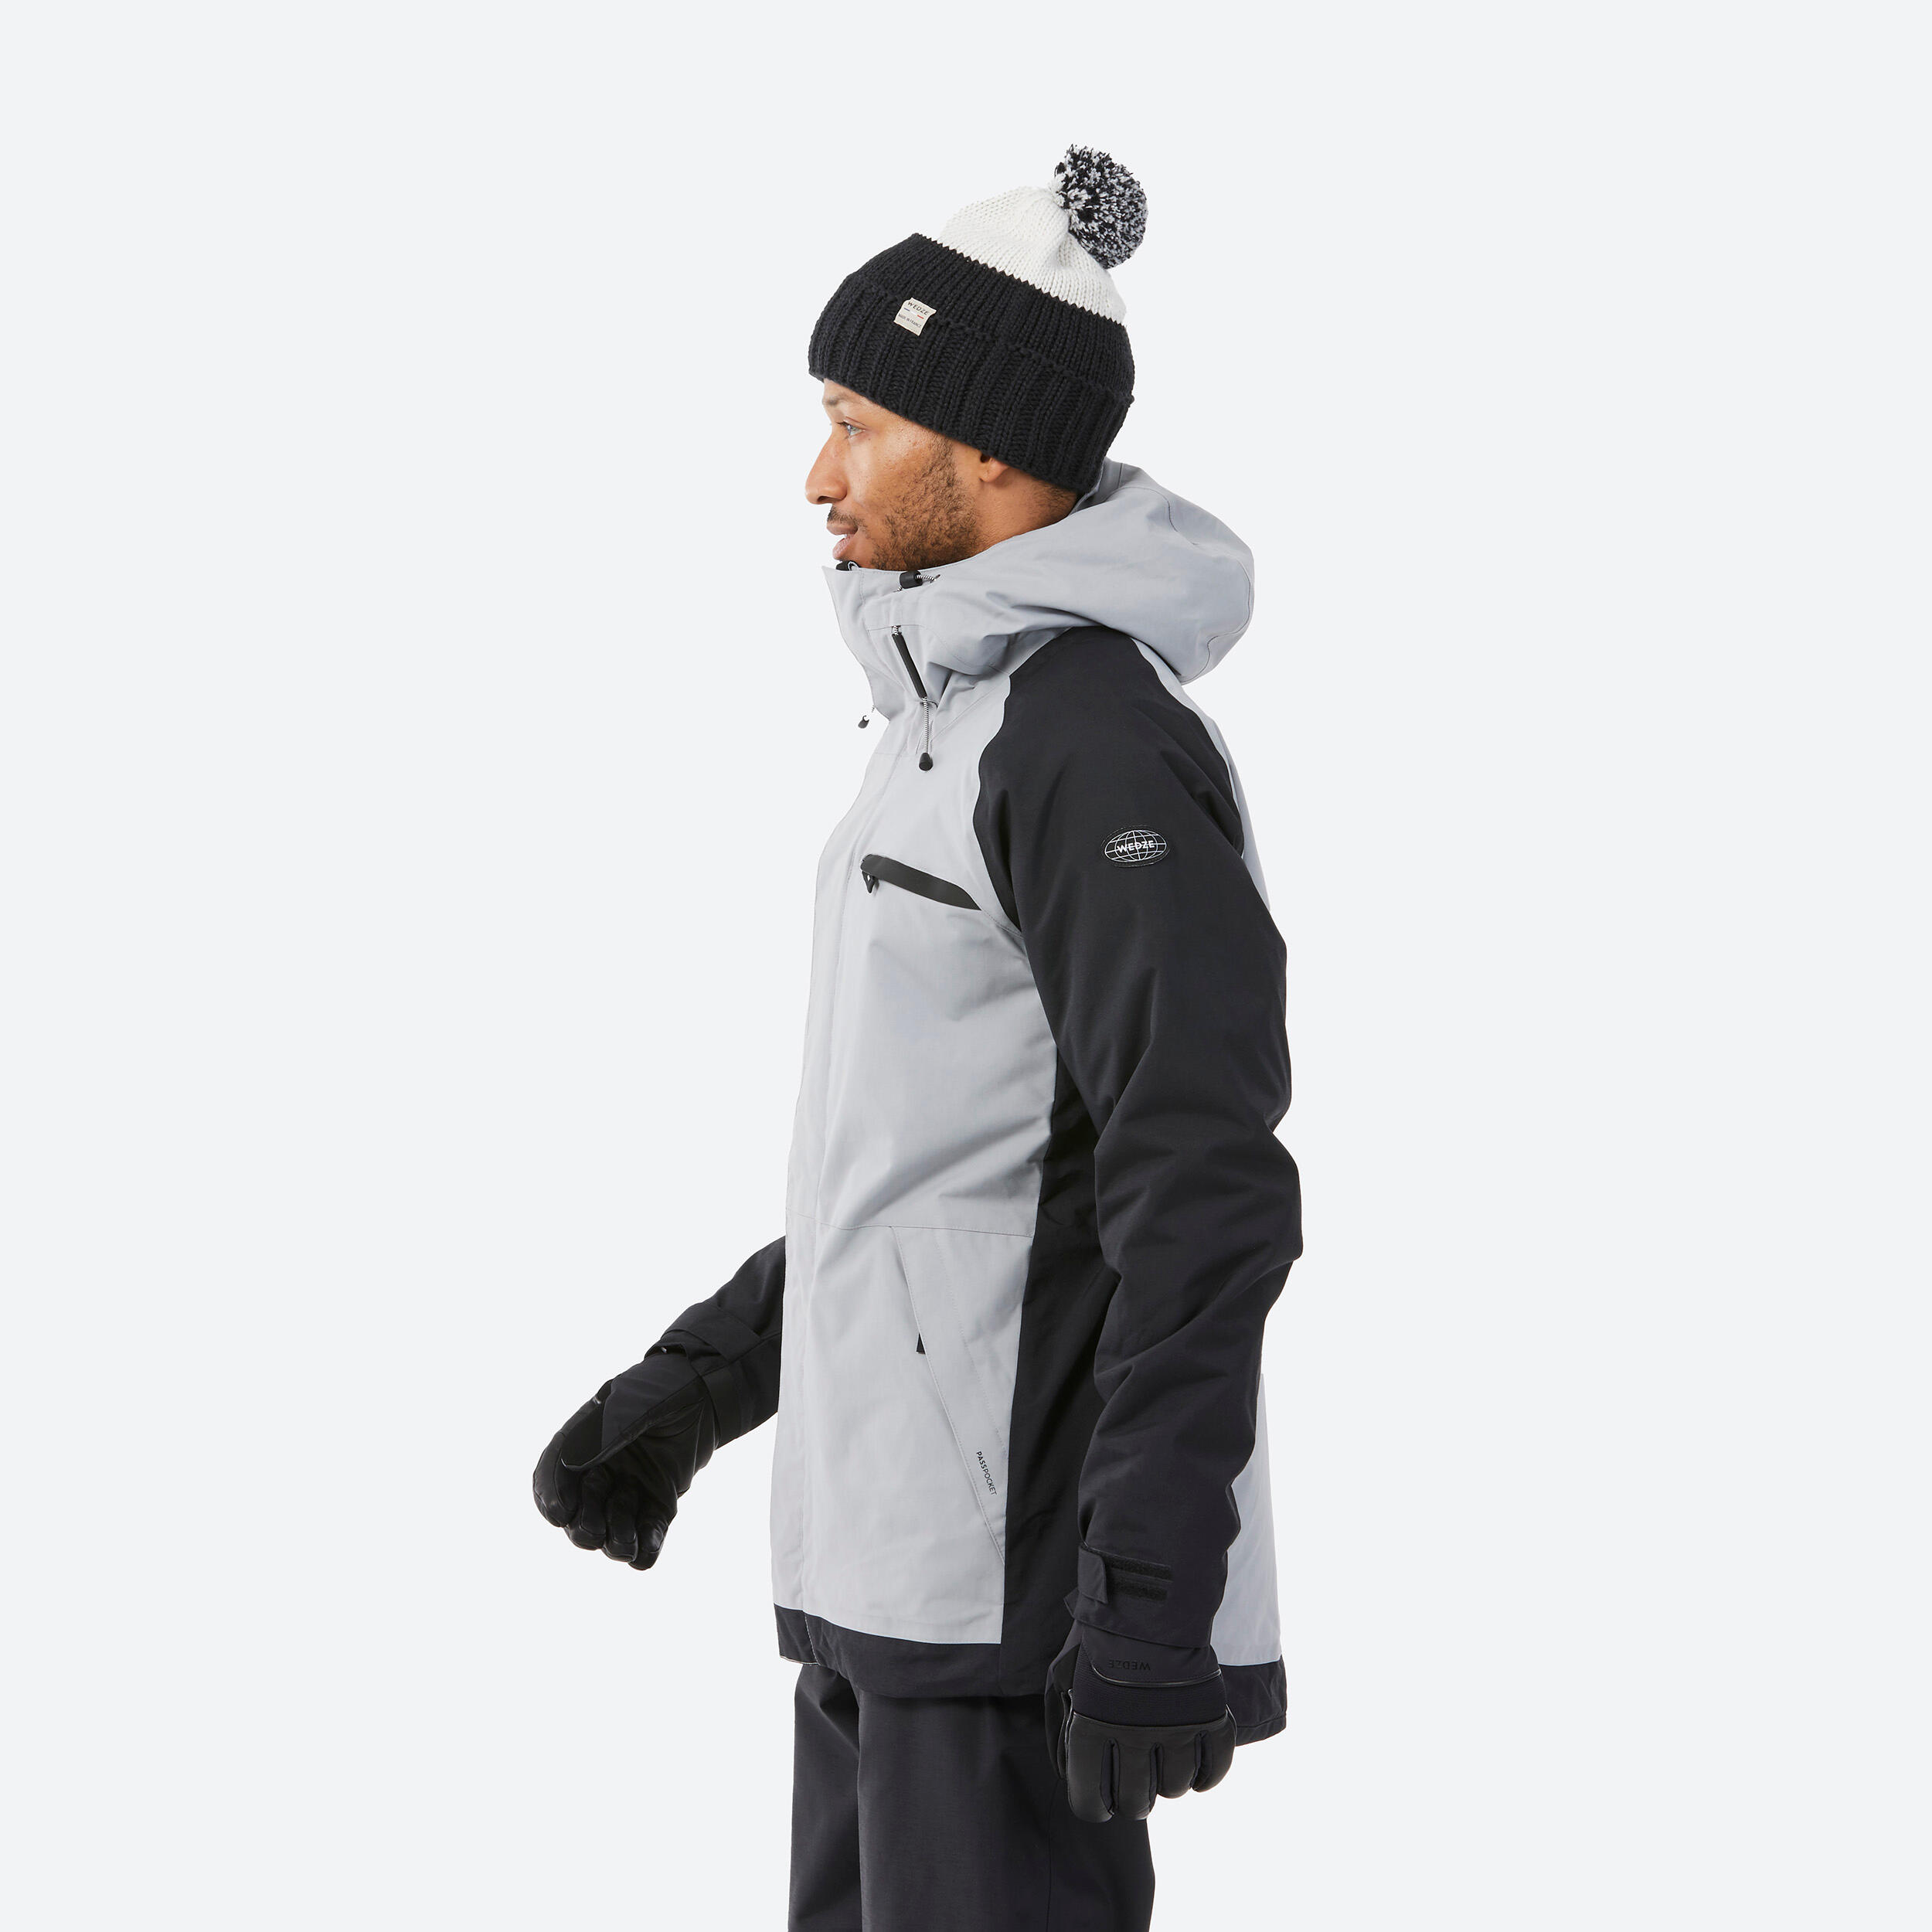 Men’s Snowboard Jacket - SNB 100 Grey/Black - DREAMSCAPE